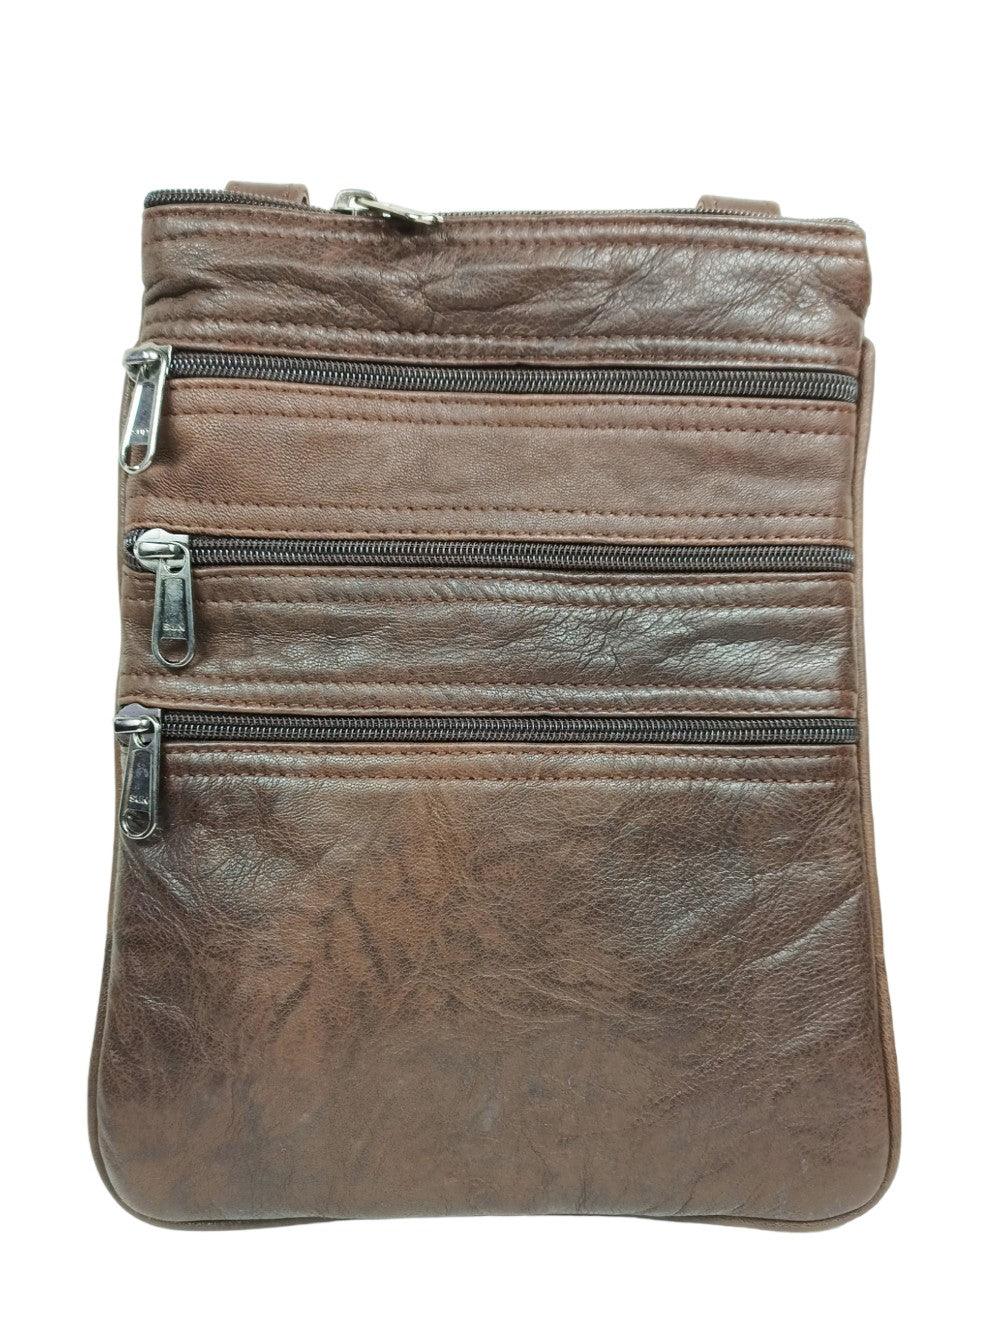 leather sling bag - directcreate.com